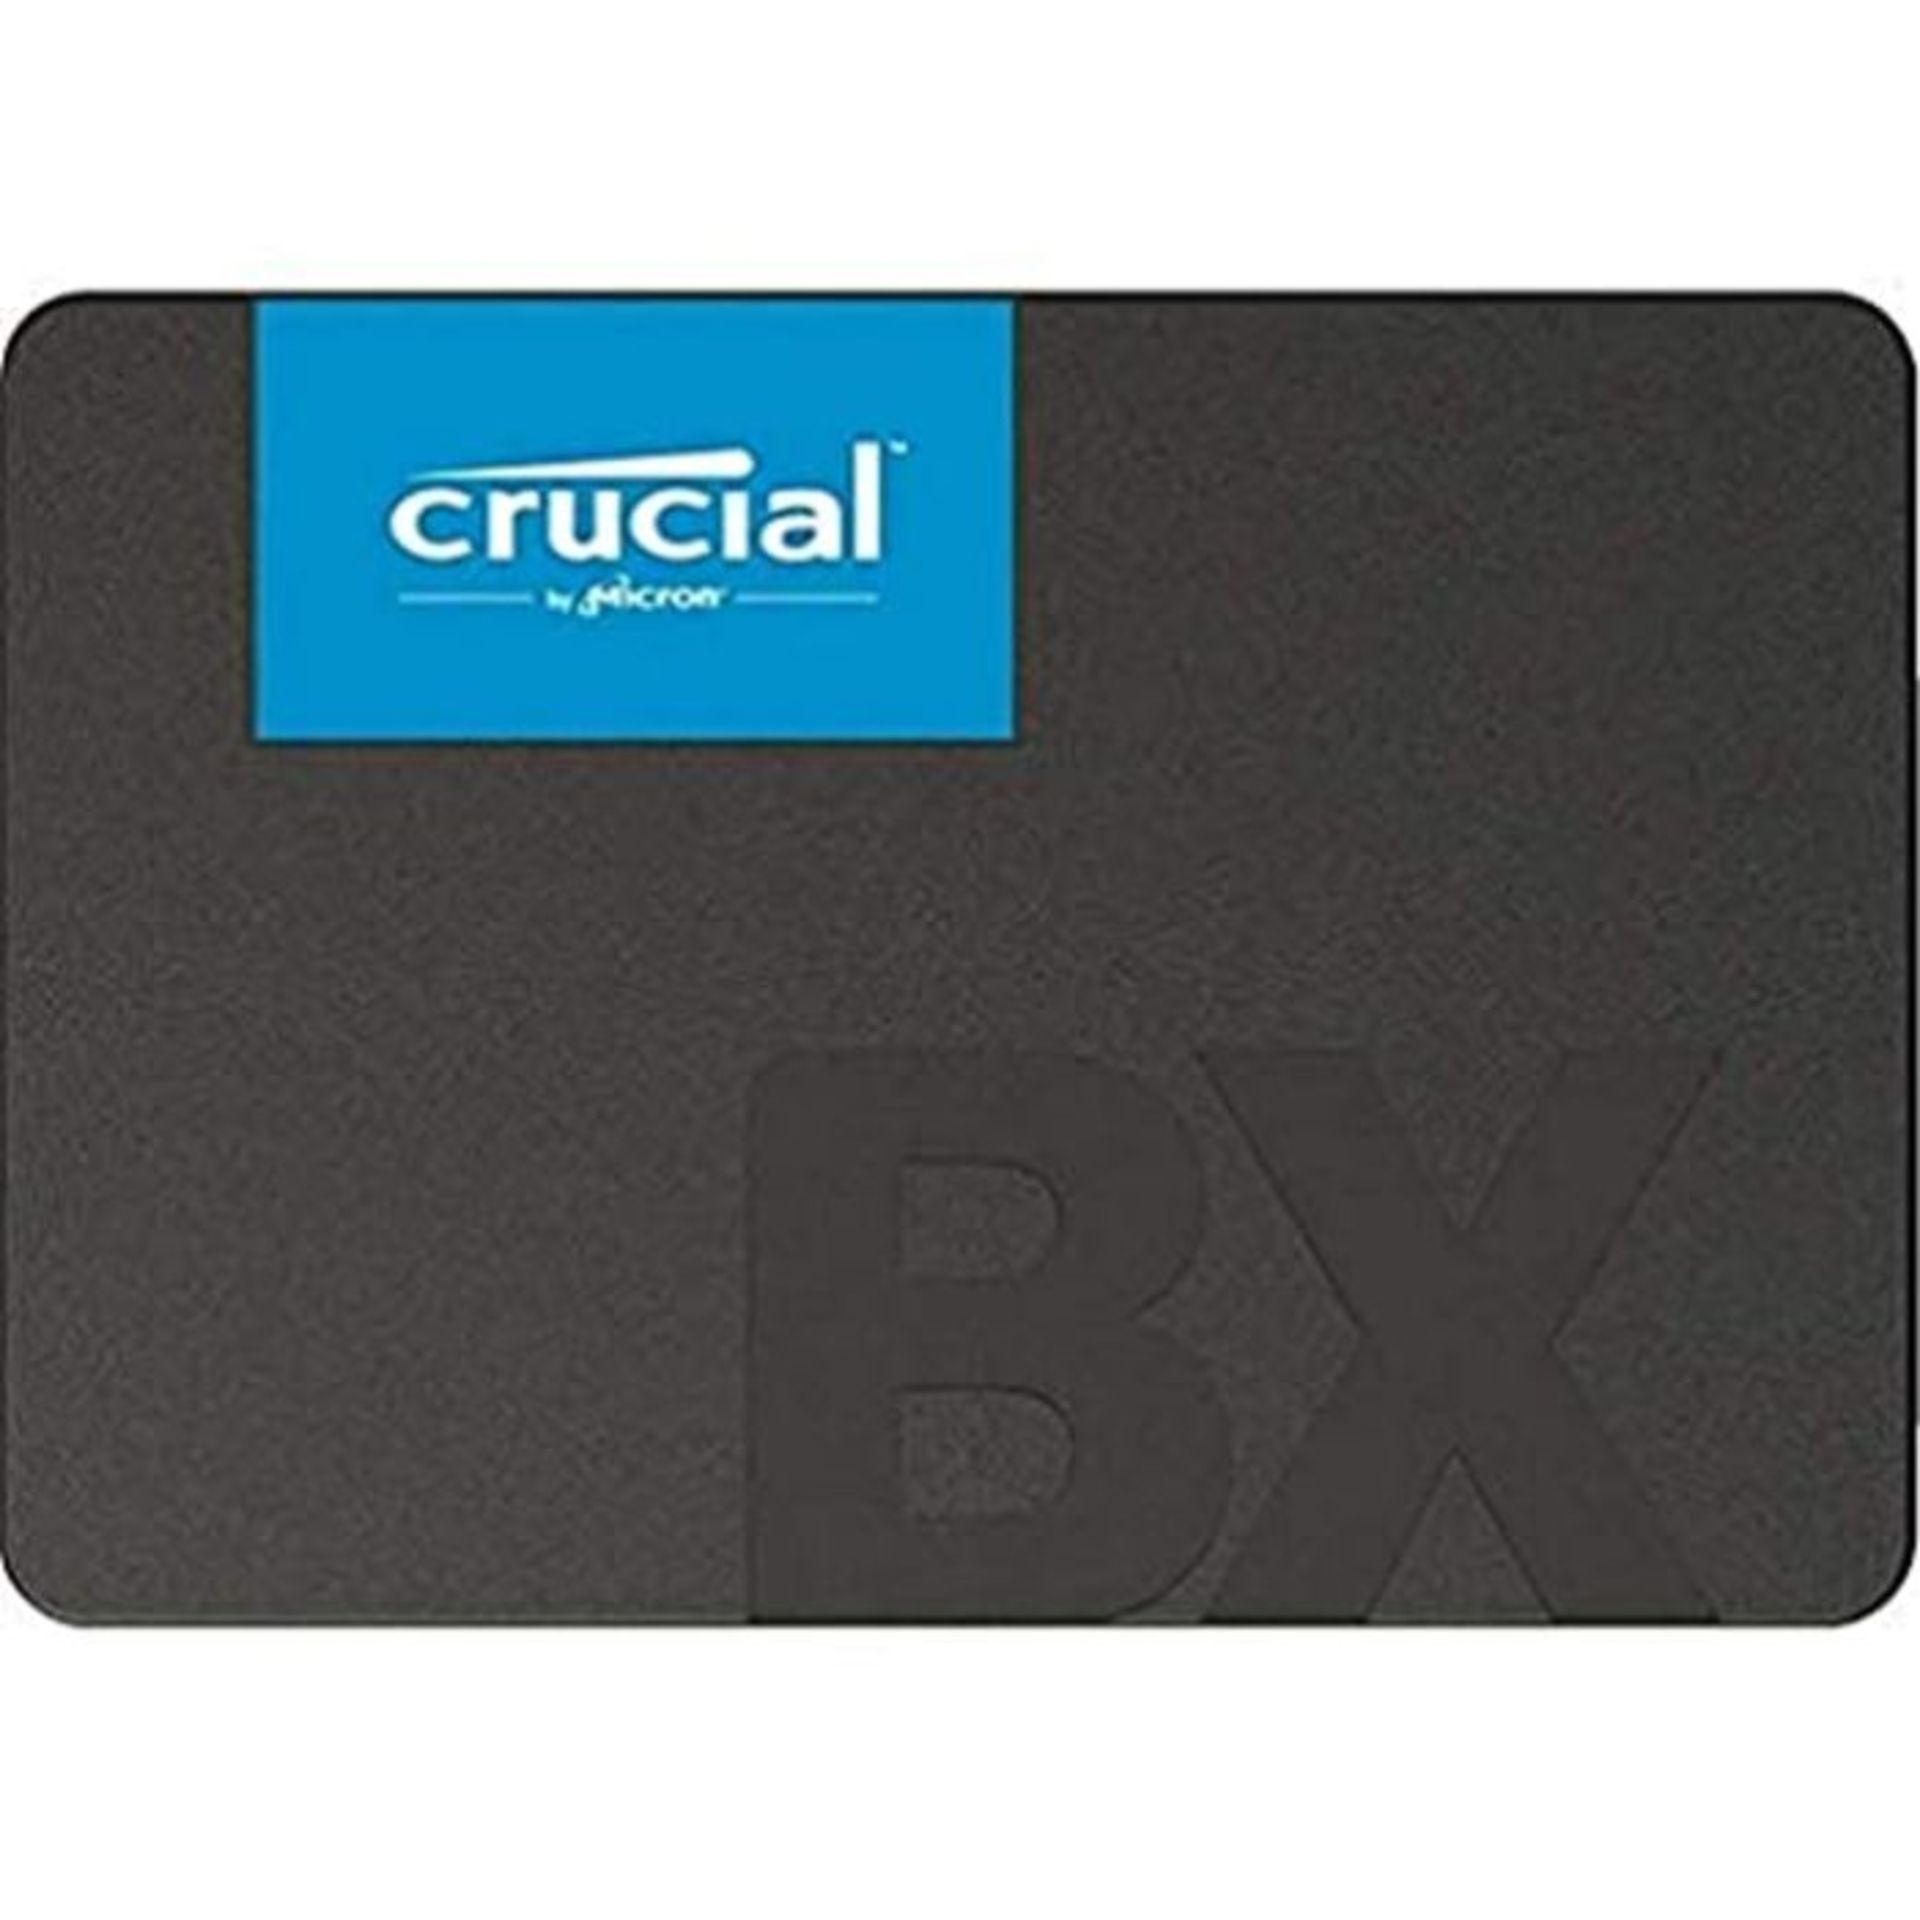 Crucial BX500 480 GB CT480BX500SSD1-Up to 540 MB/s (Internal SSD, 3D NAND, SATA, 2.5 I